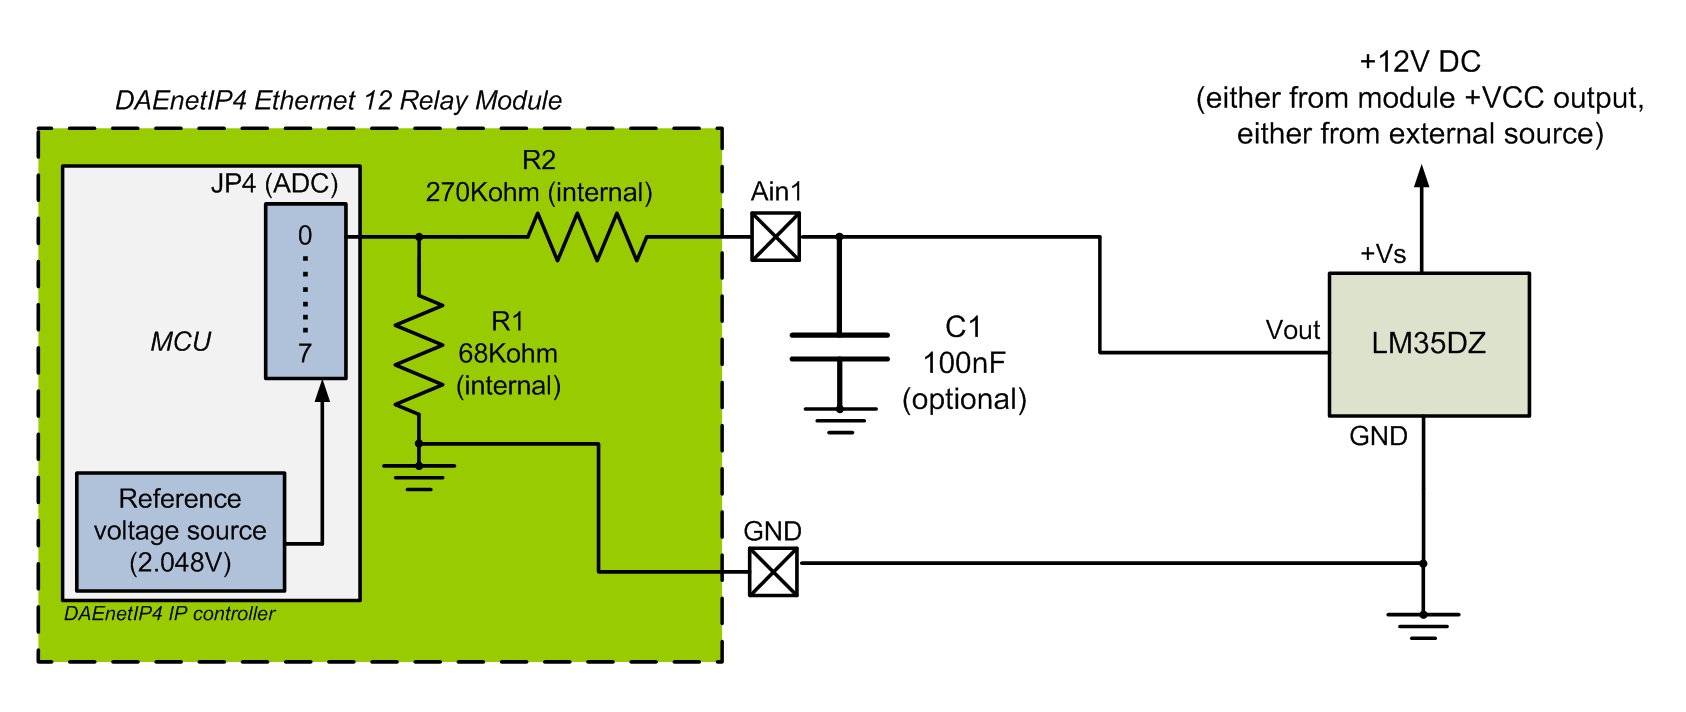 Connecting LM35DZ (temperature sensor) to DAEnetIP4